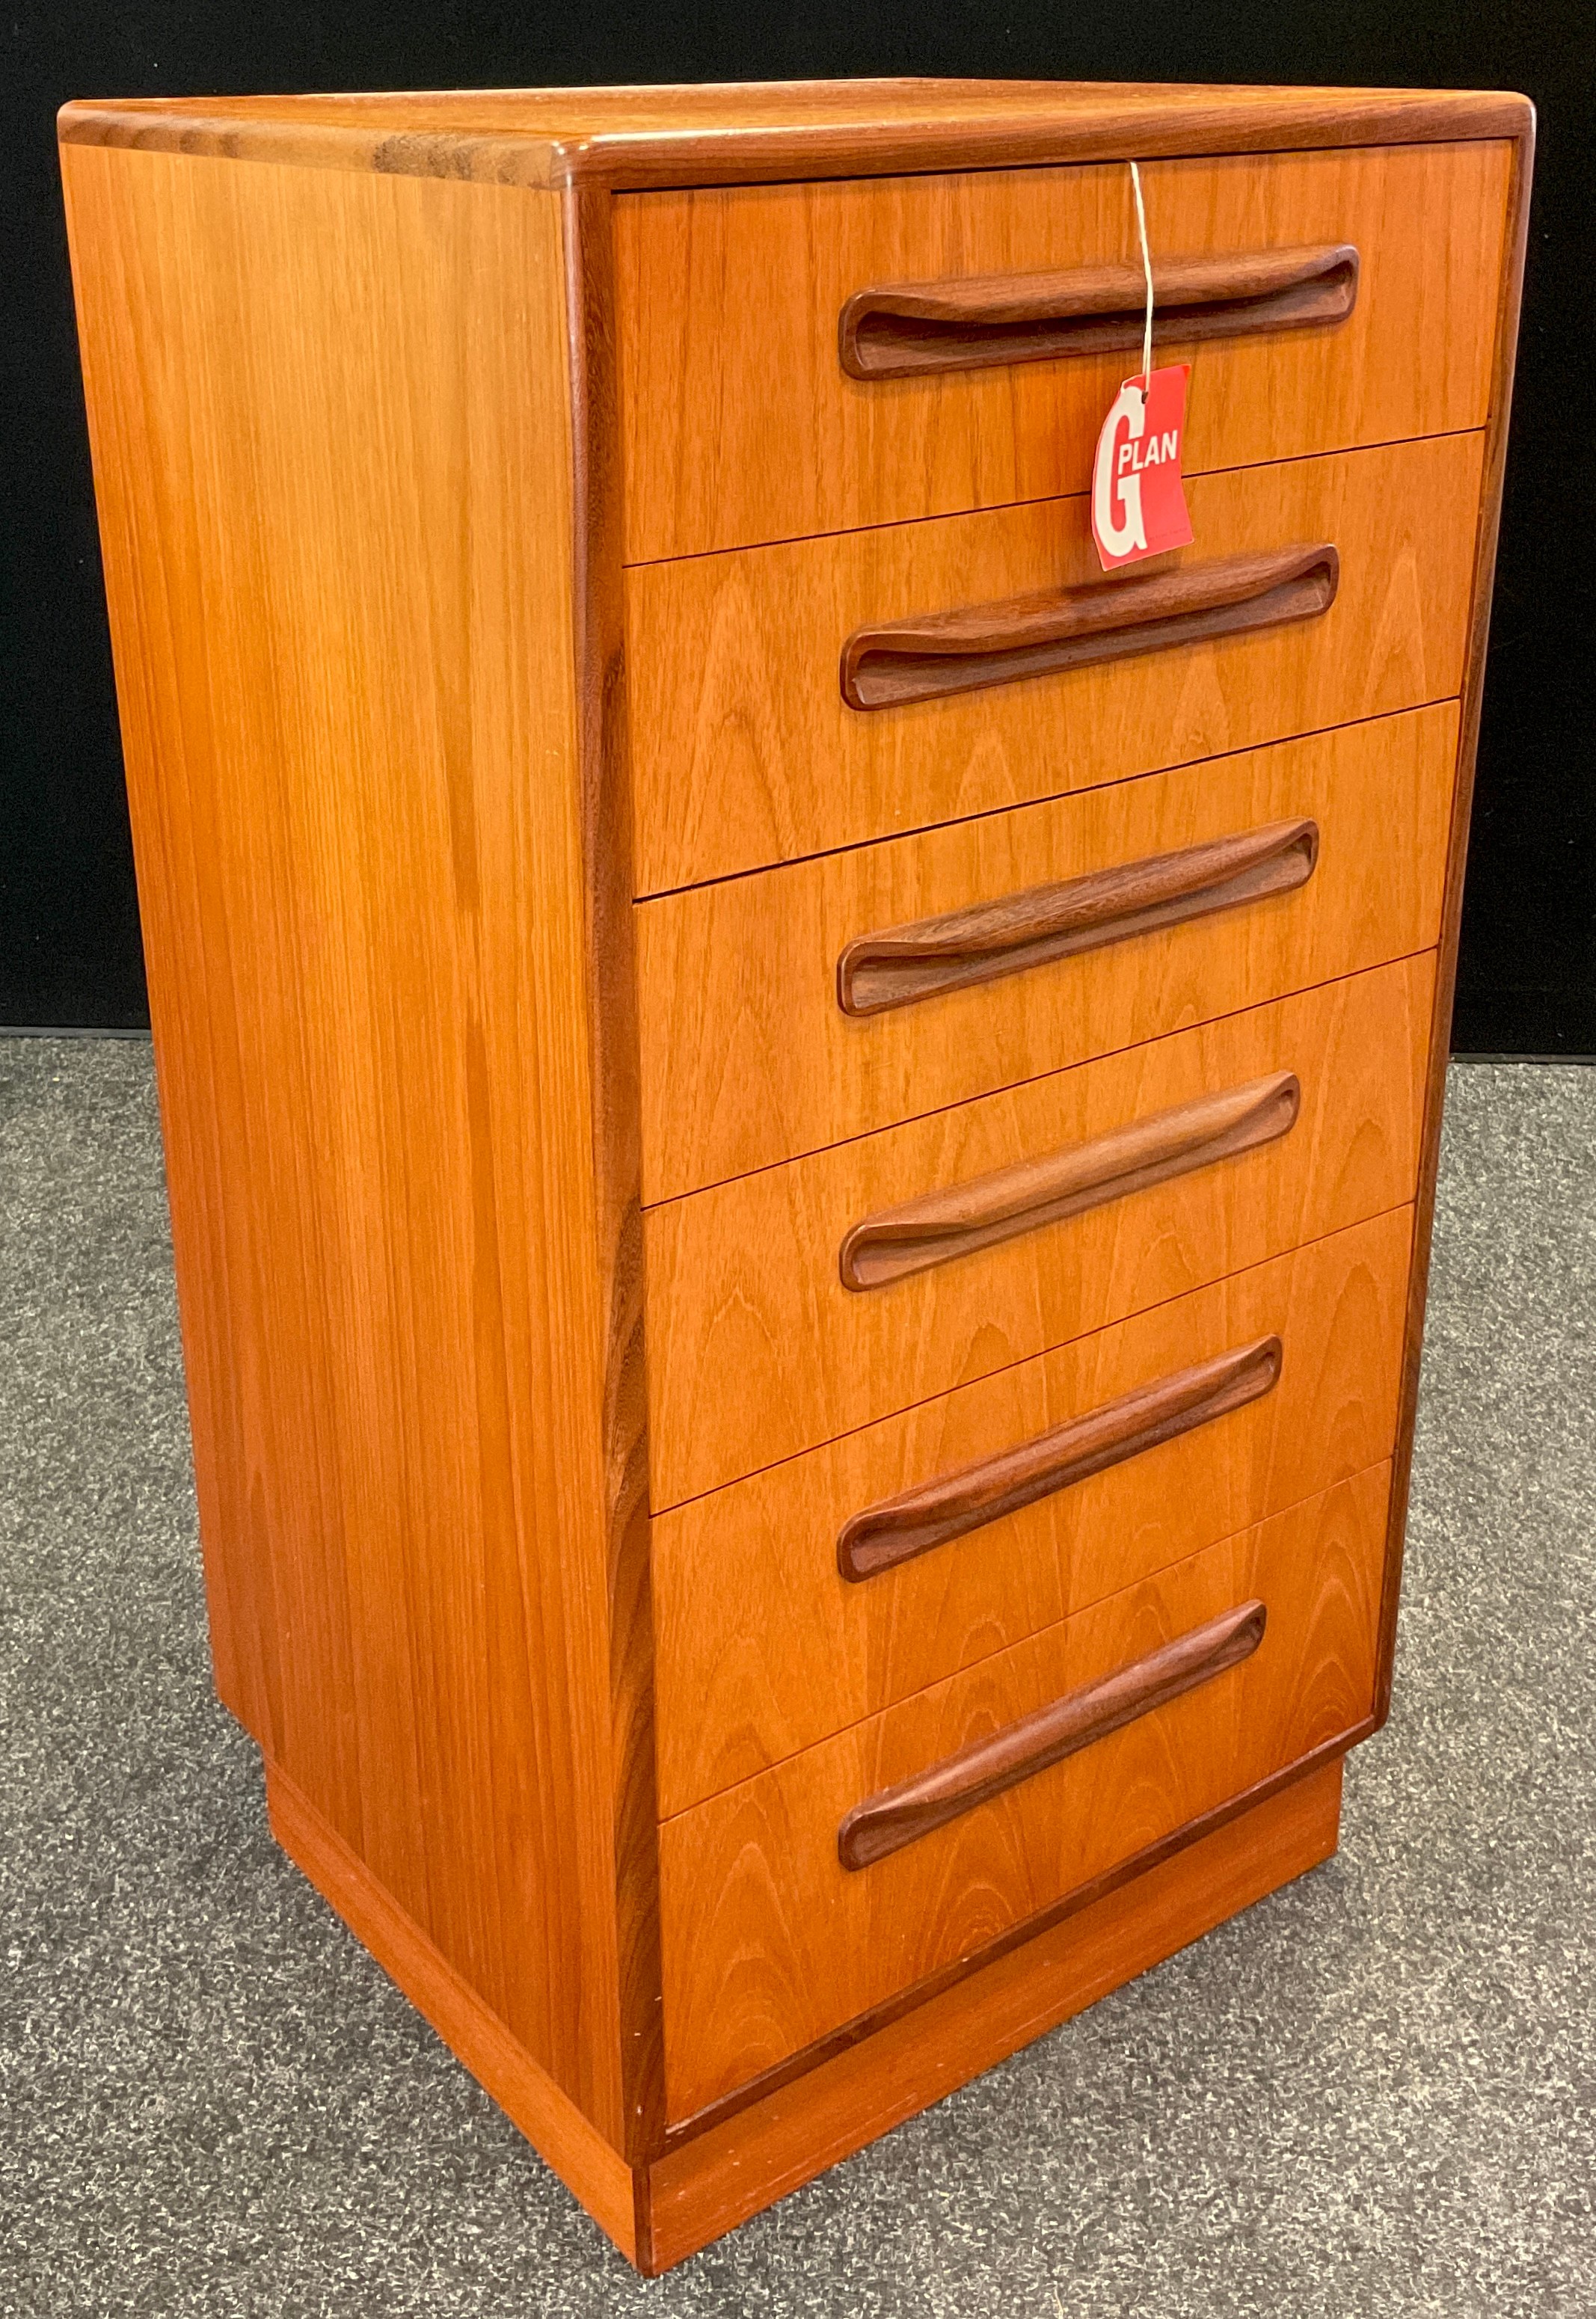 A G-plan teak tall chest of drawers, Fresco model, six drawers, 100cm high x 53.5cm wide x 44.5cm,